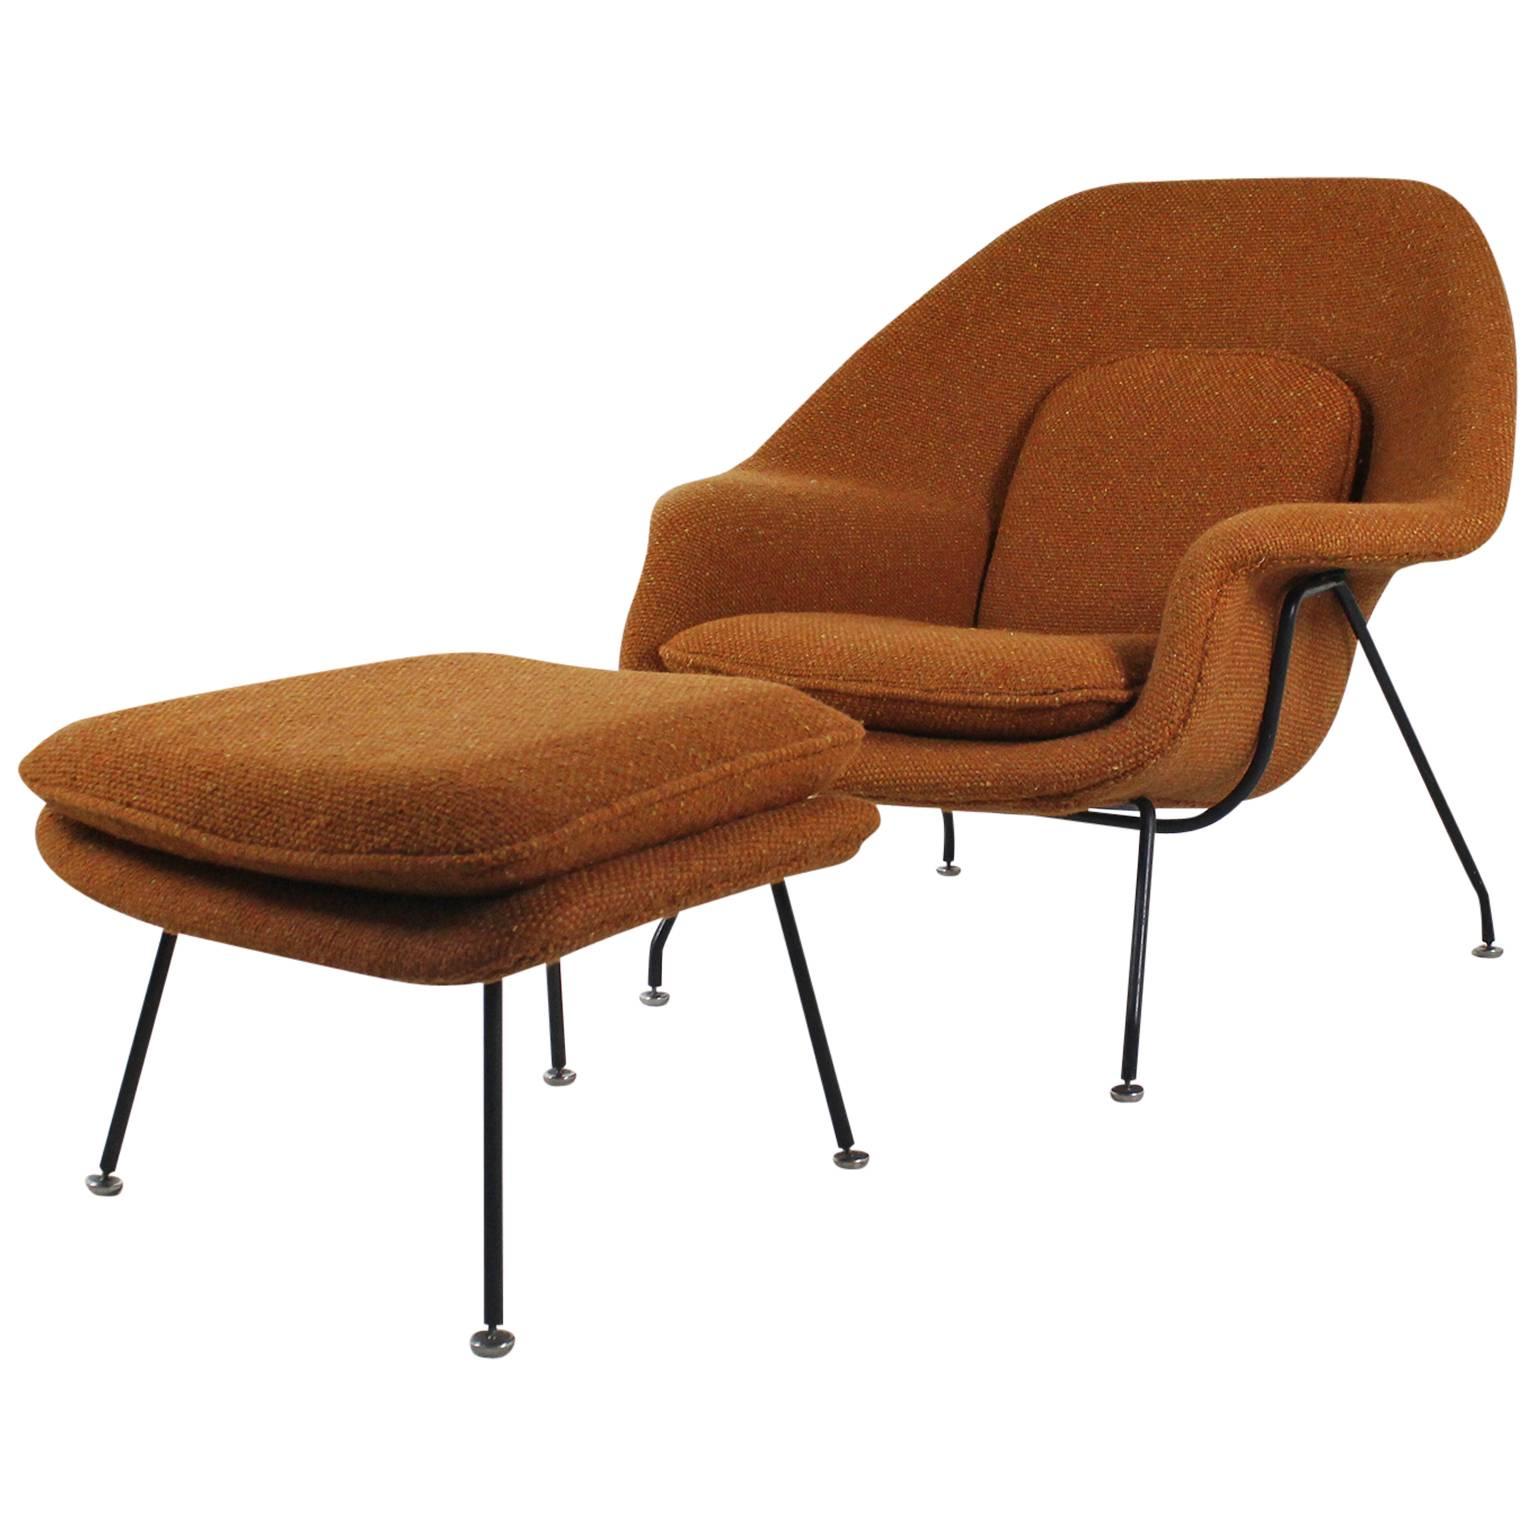 "Womb Chair" and Its Ottoman by Eero Saarinen, 1950-1960